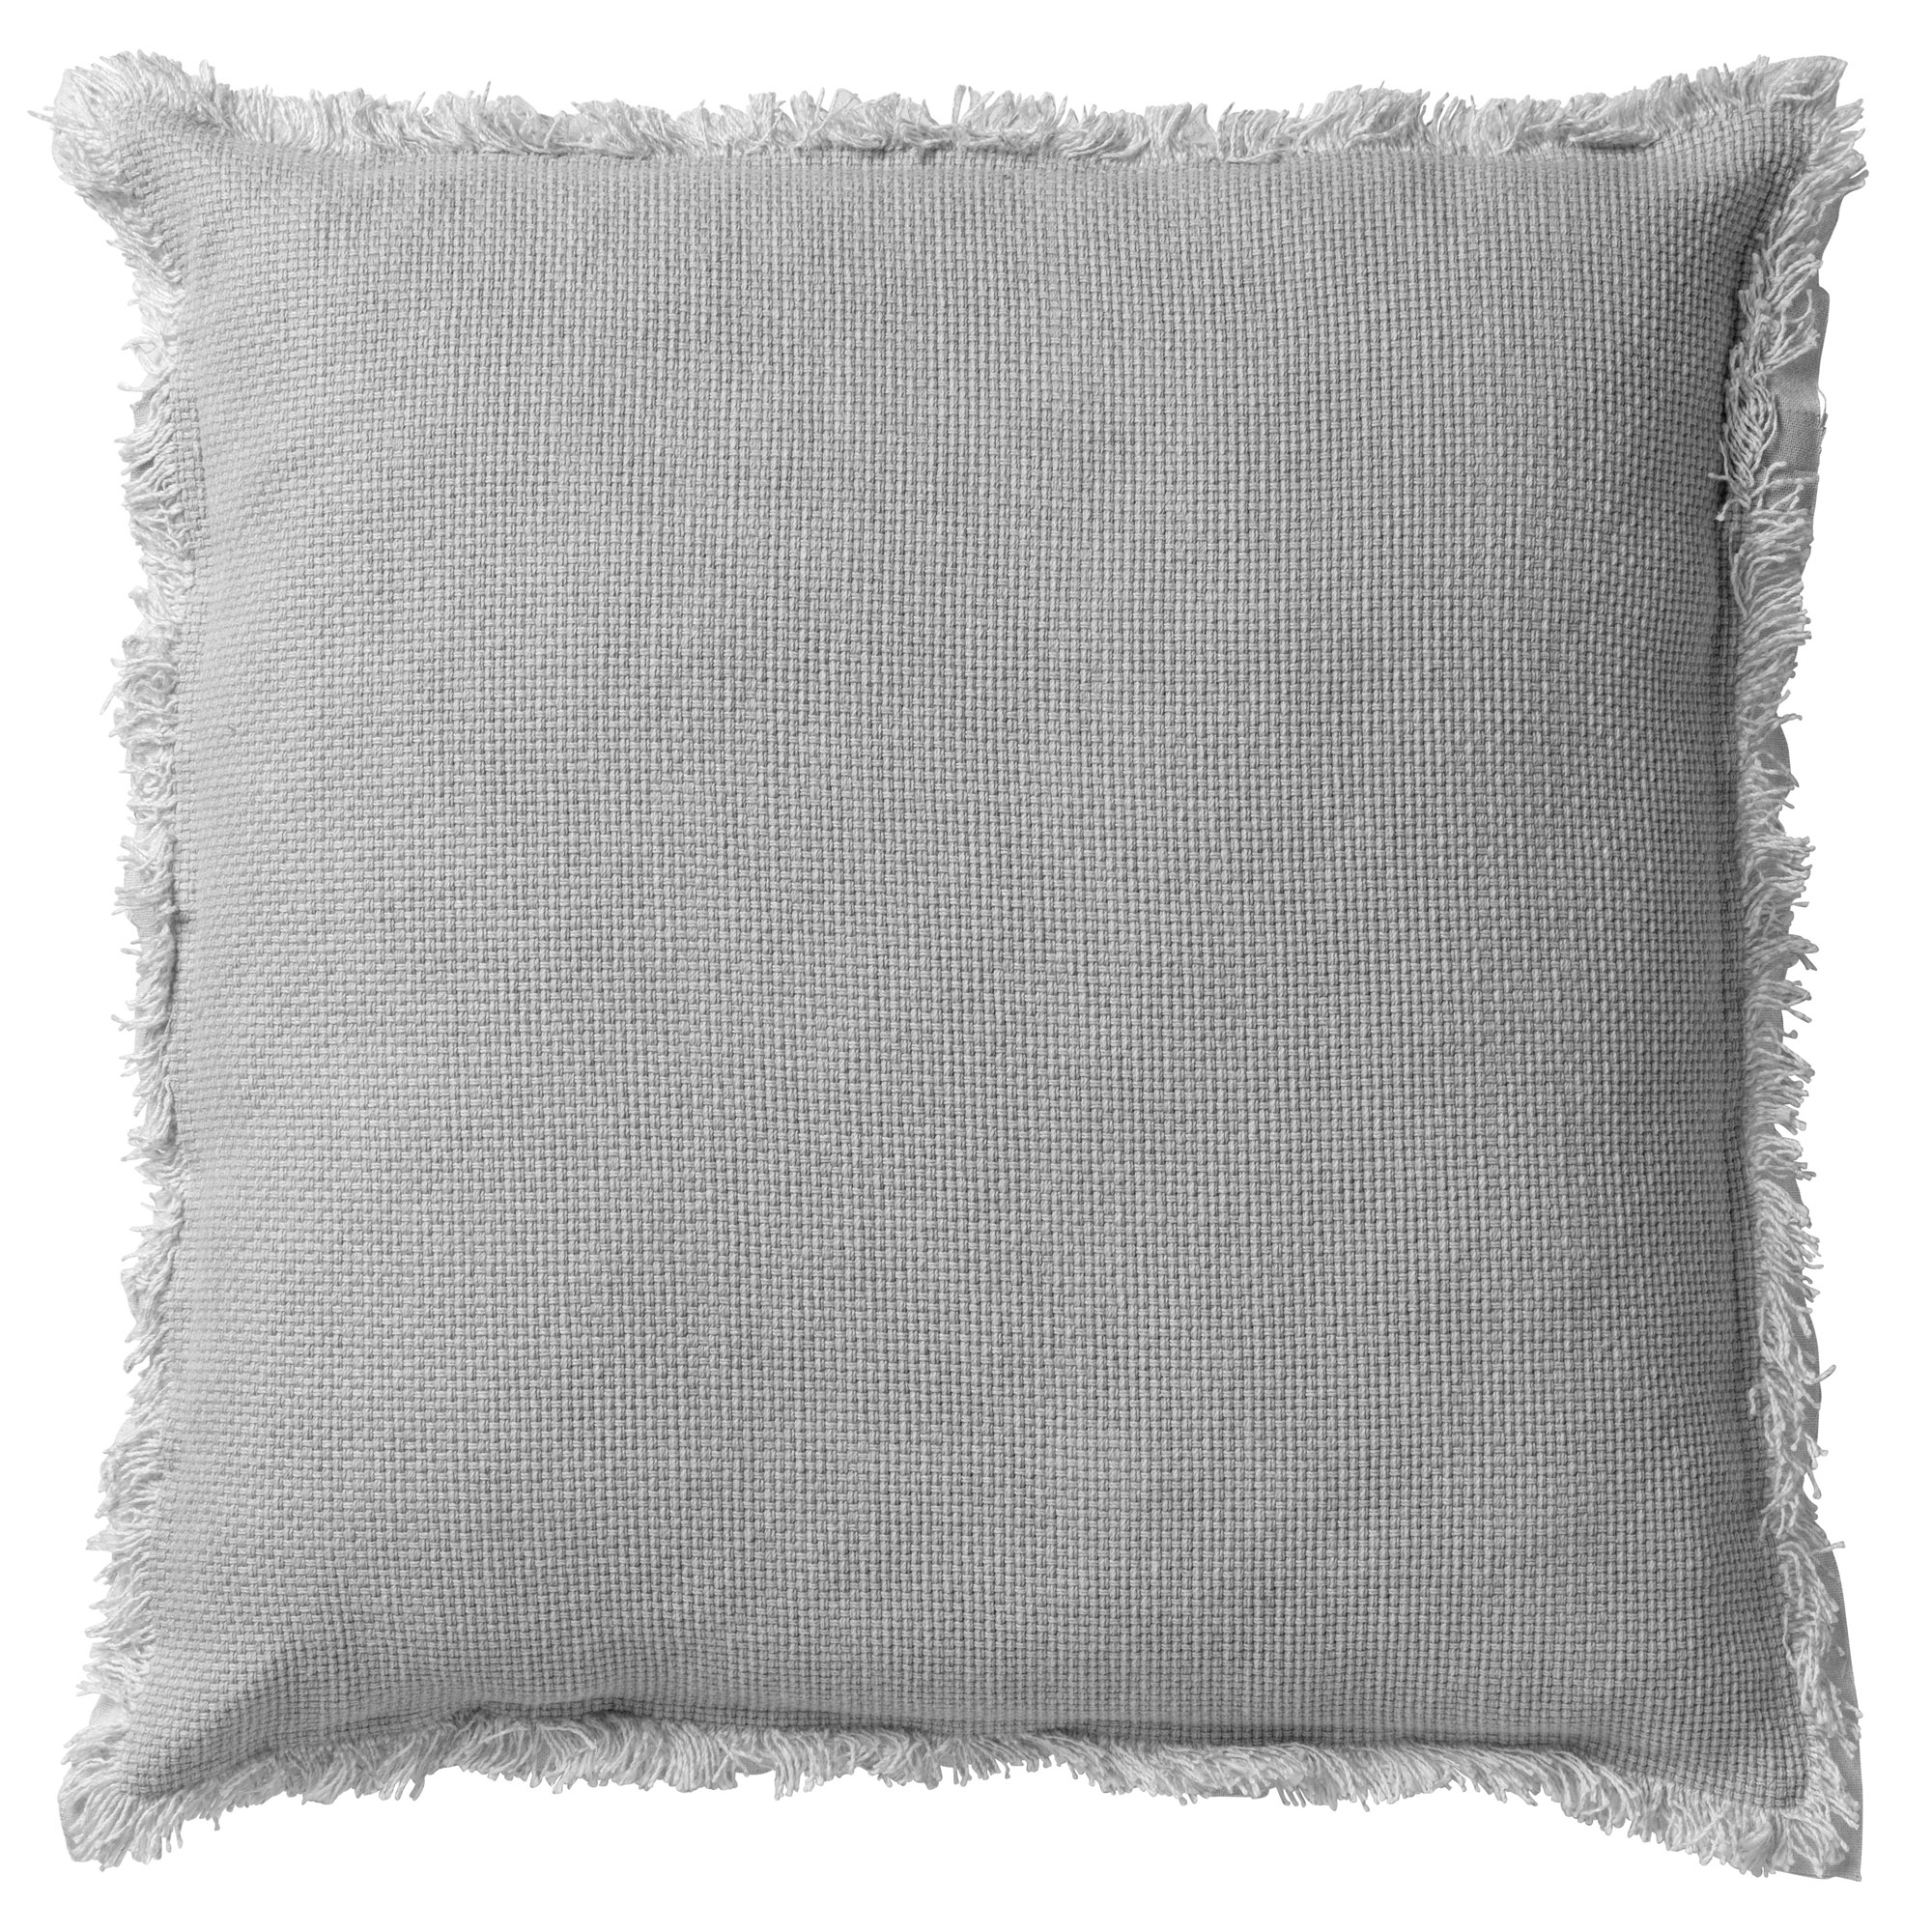 BURTO - Cushion 60x60 cm Micro Chip - grey